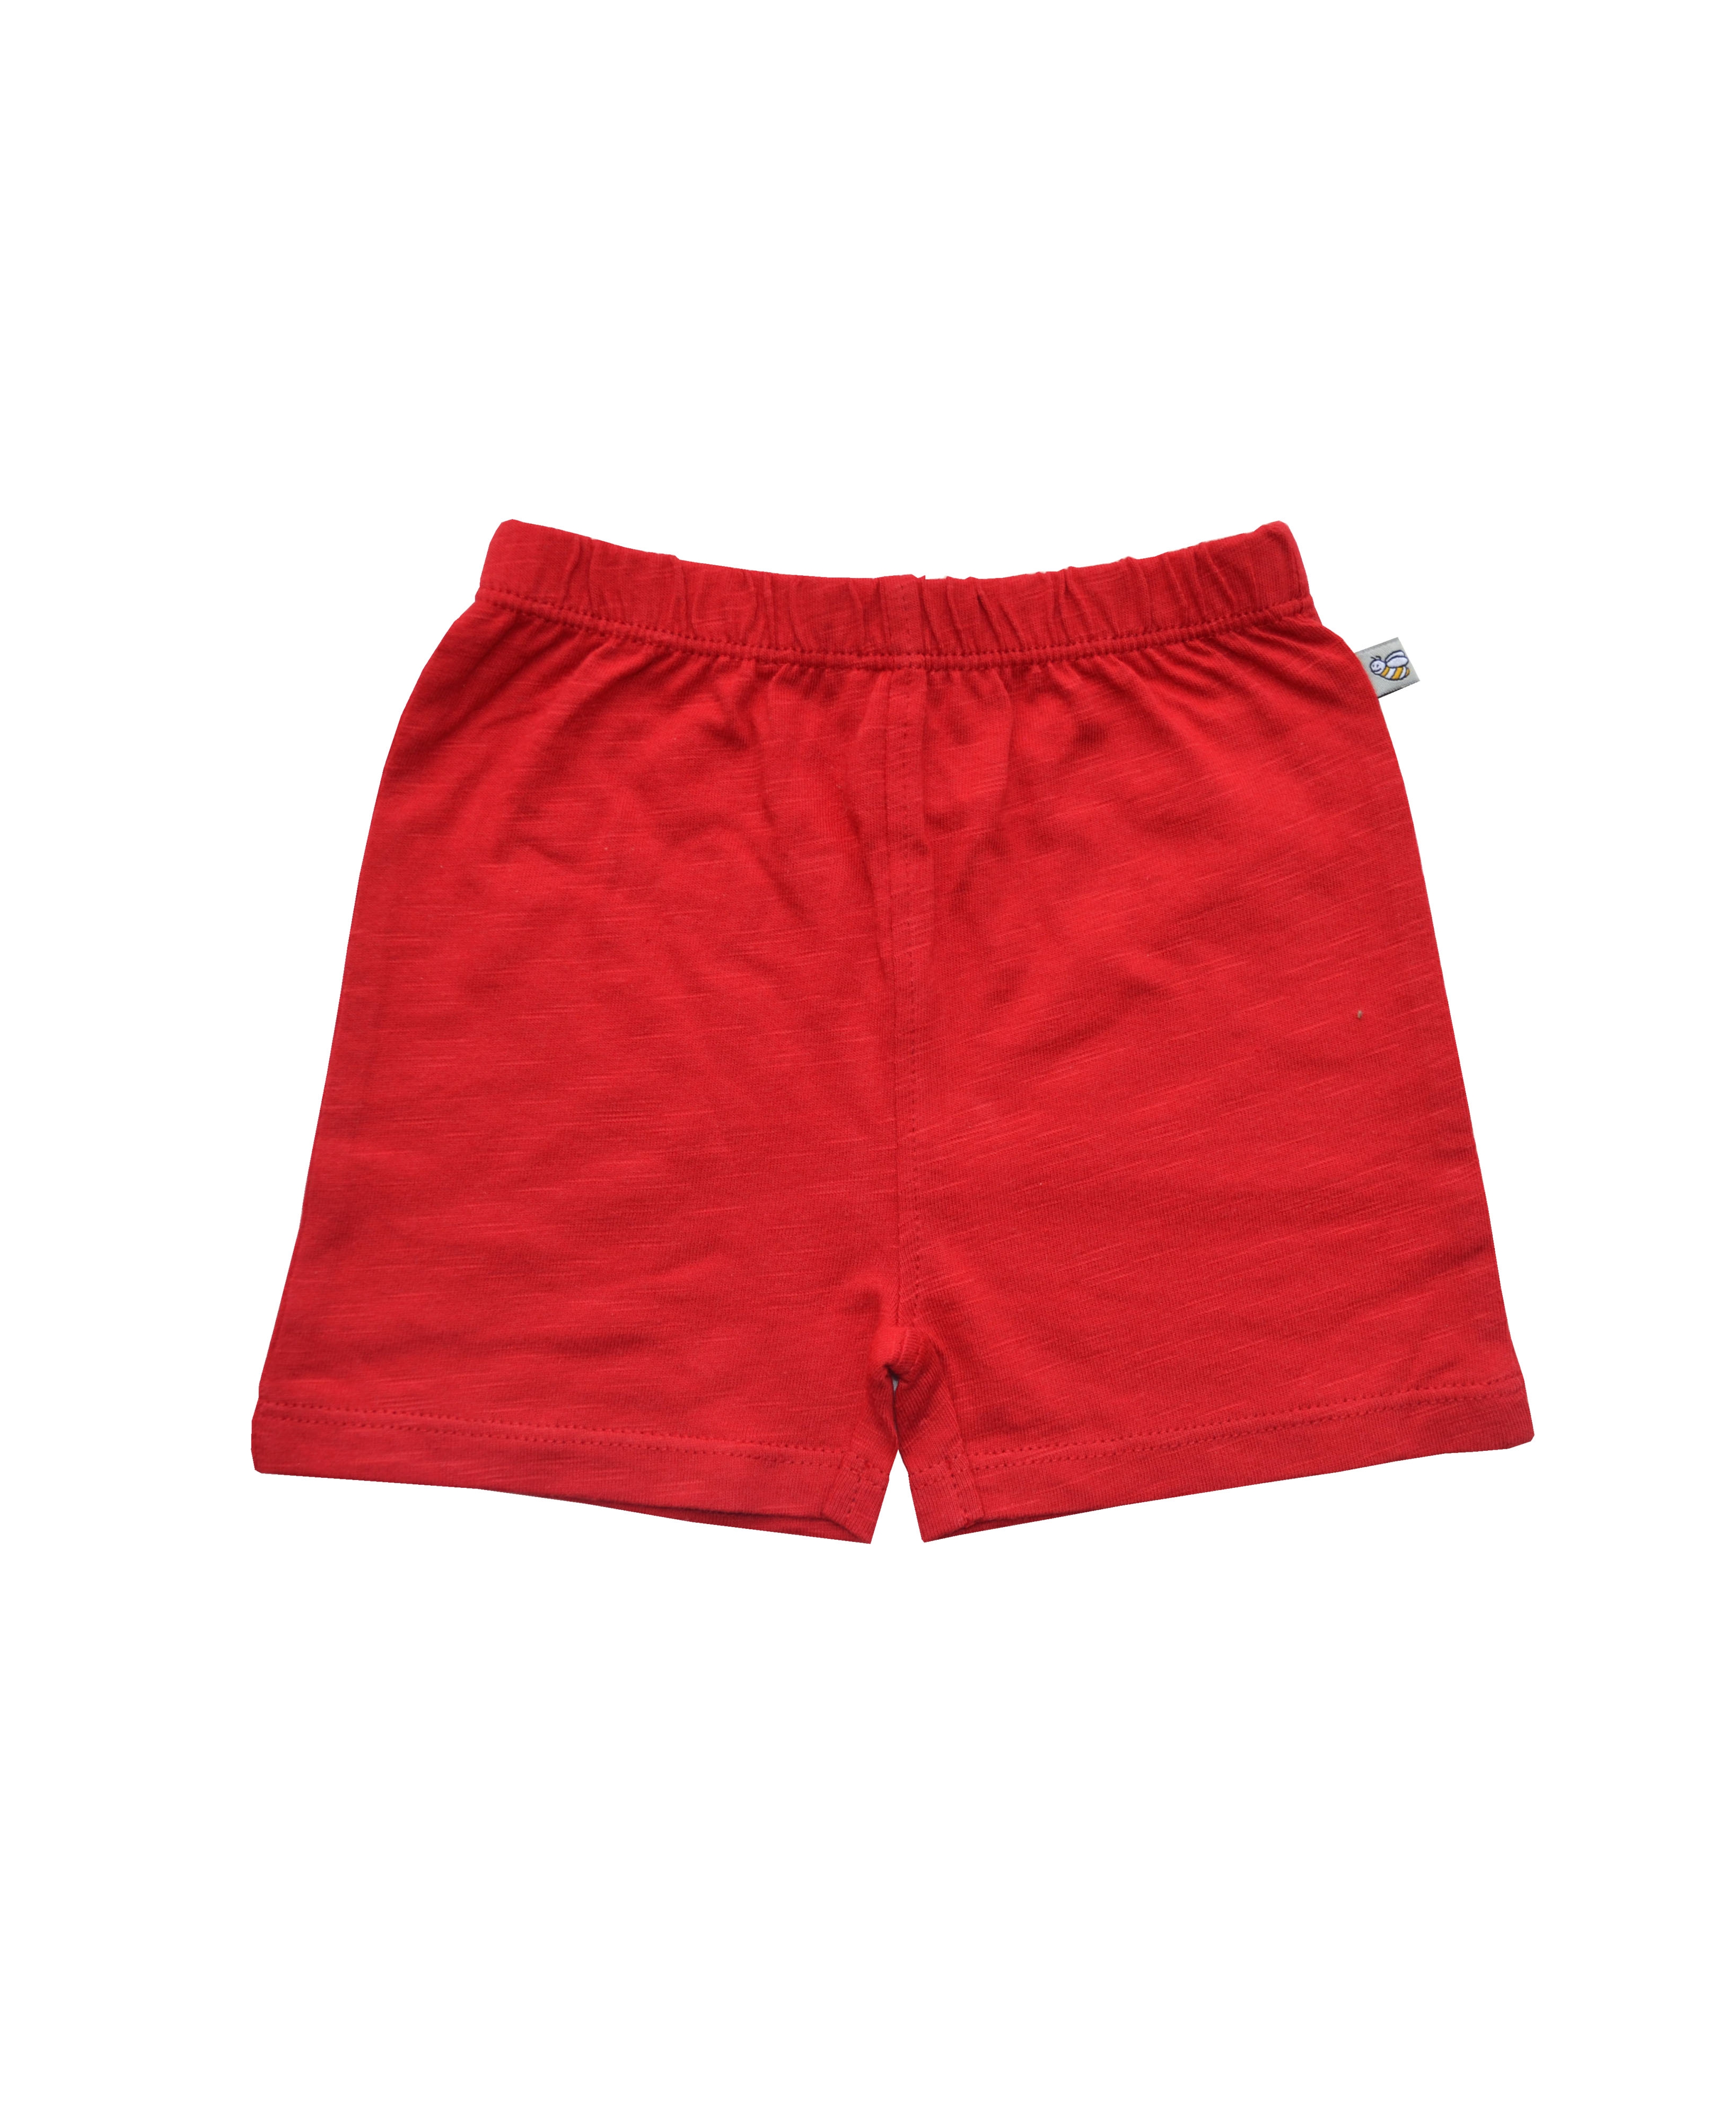 Red Boys Shorts (100% Cotton Slub Jersey)